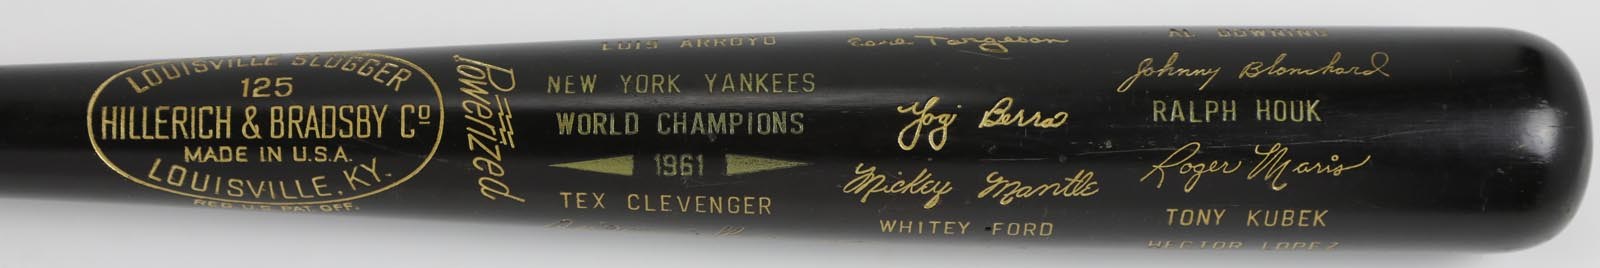 - 1961 New York Yankees World Champions Commemorative Bat